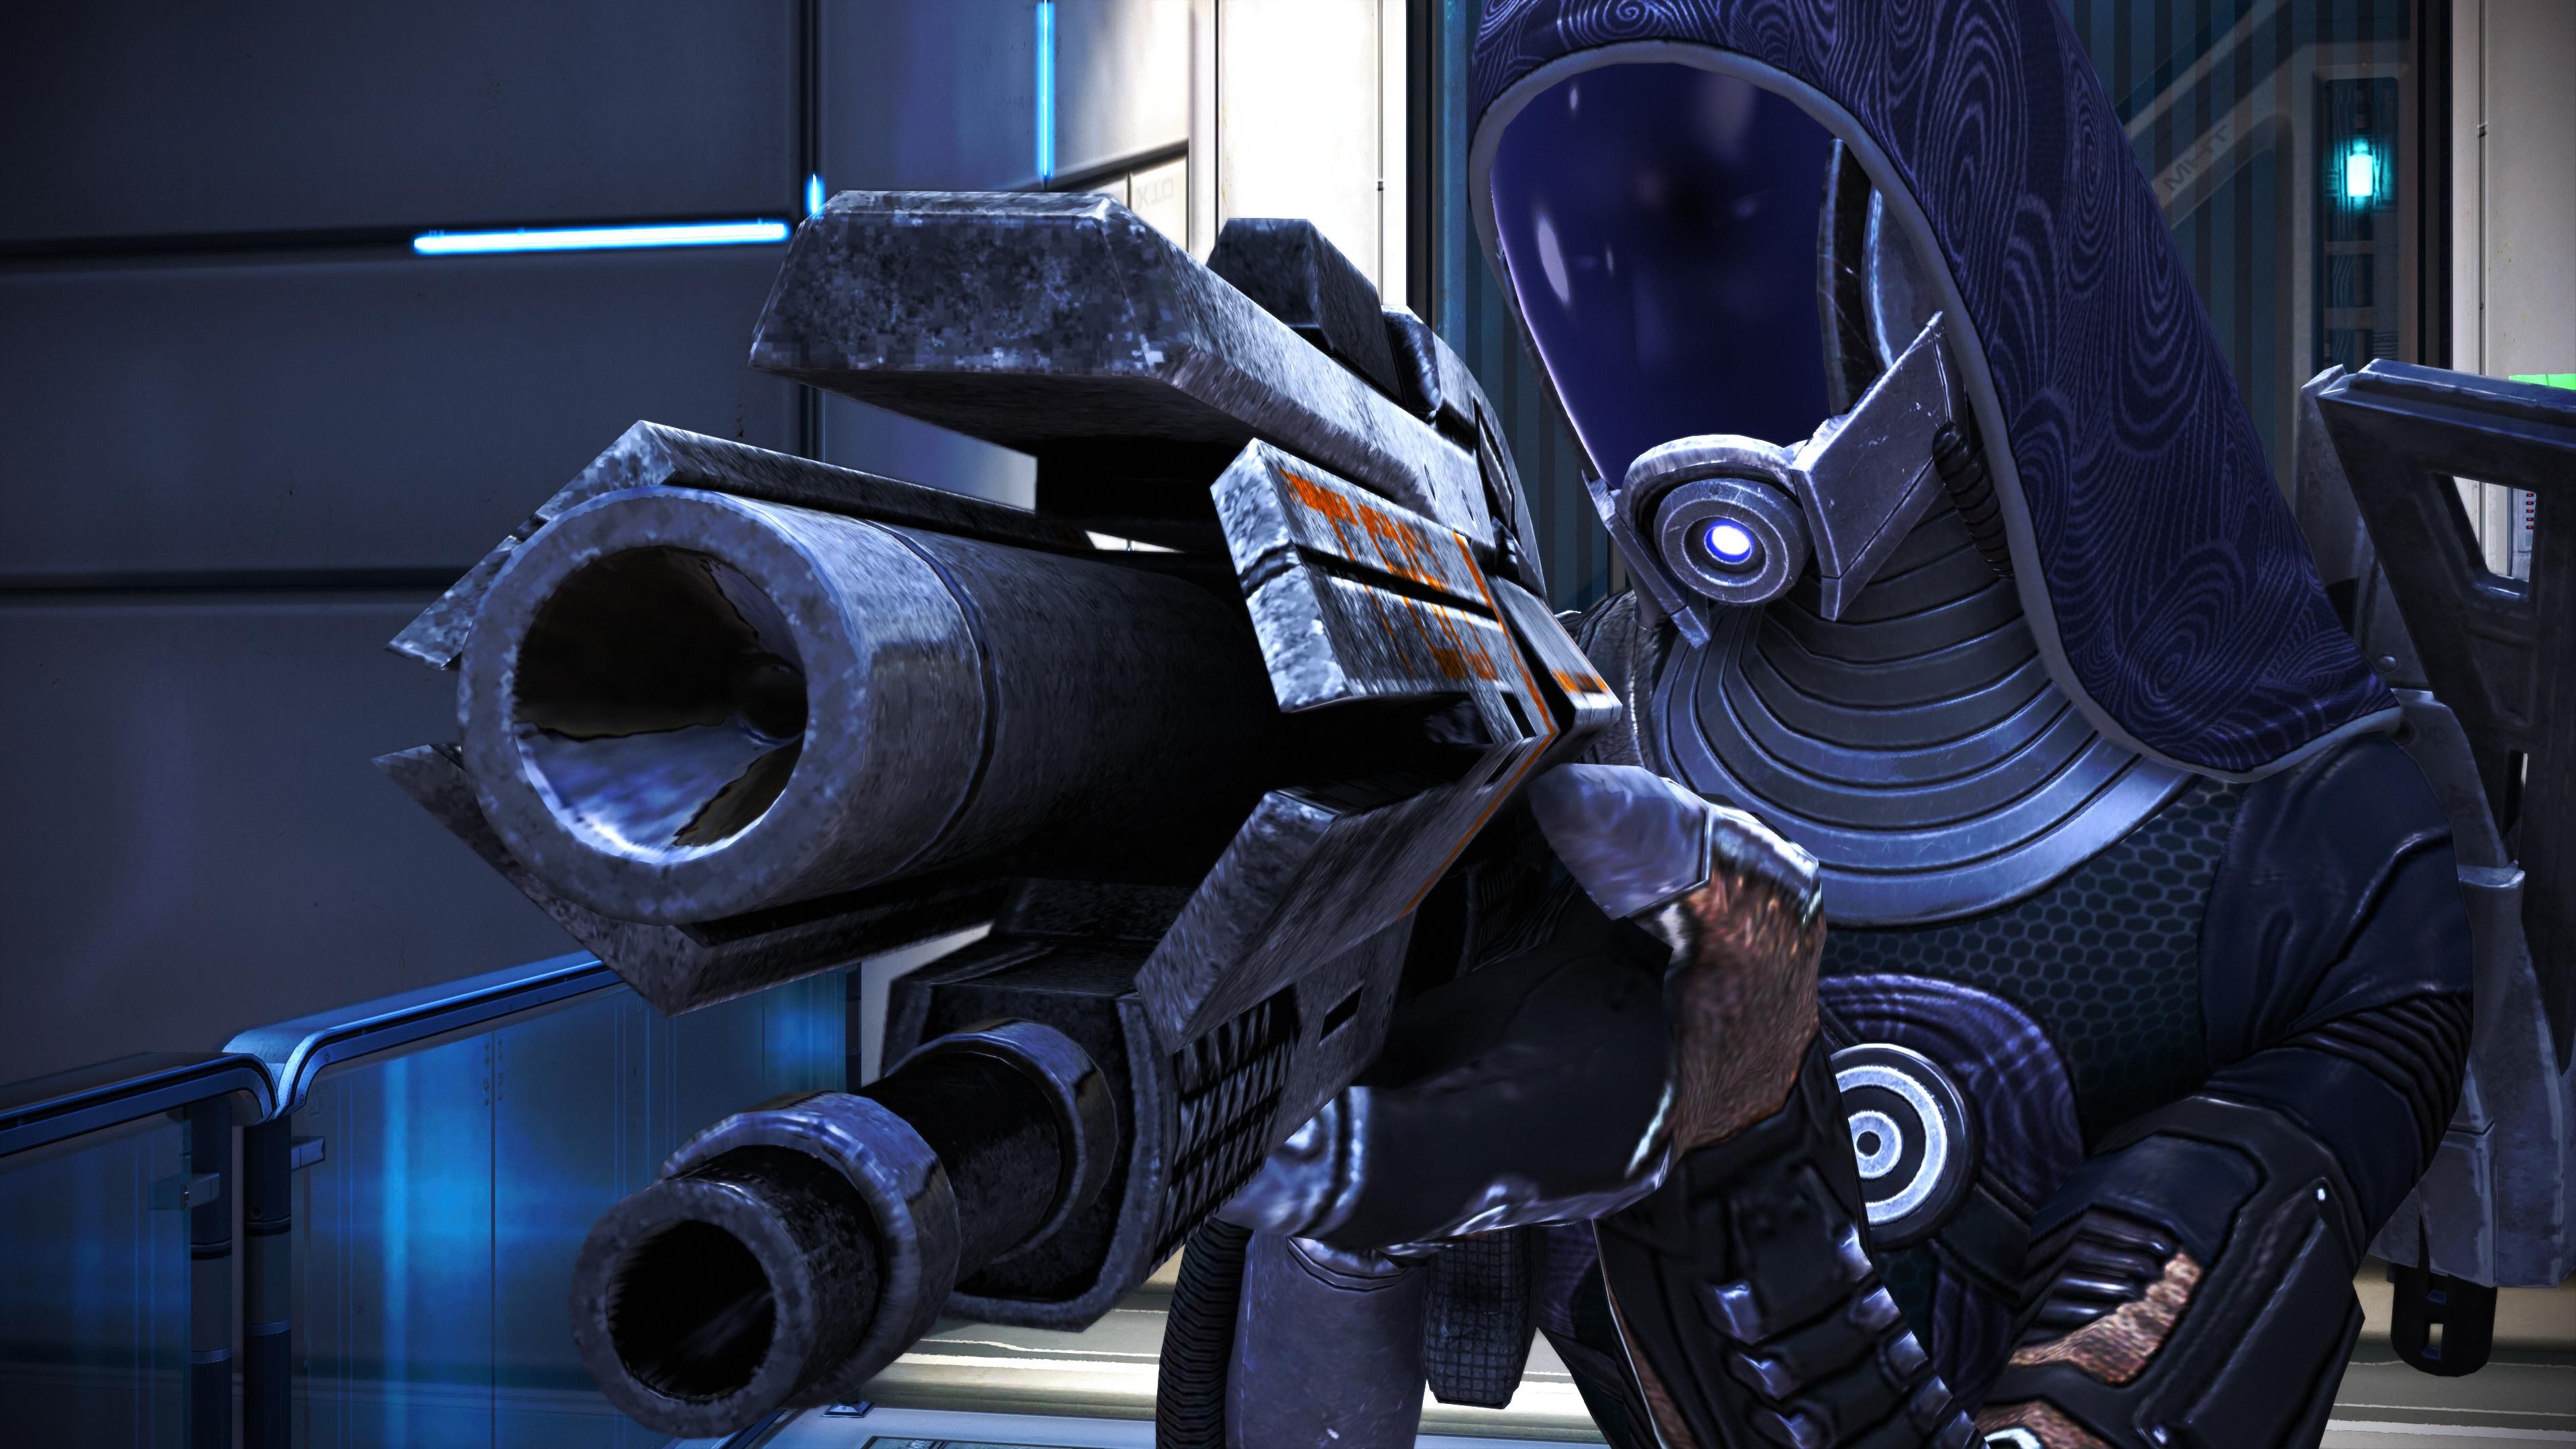 Mass Effect™ издание Legendary instal the new version for ipod